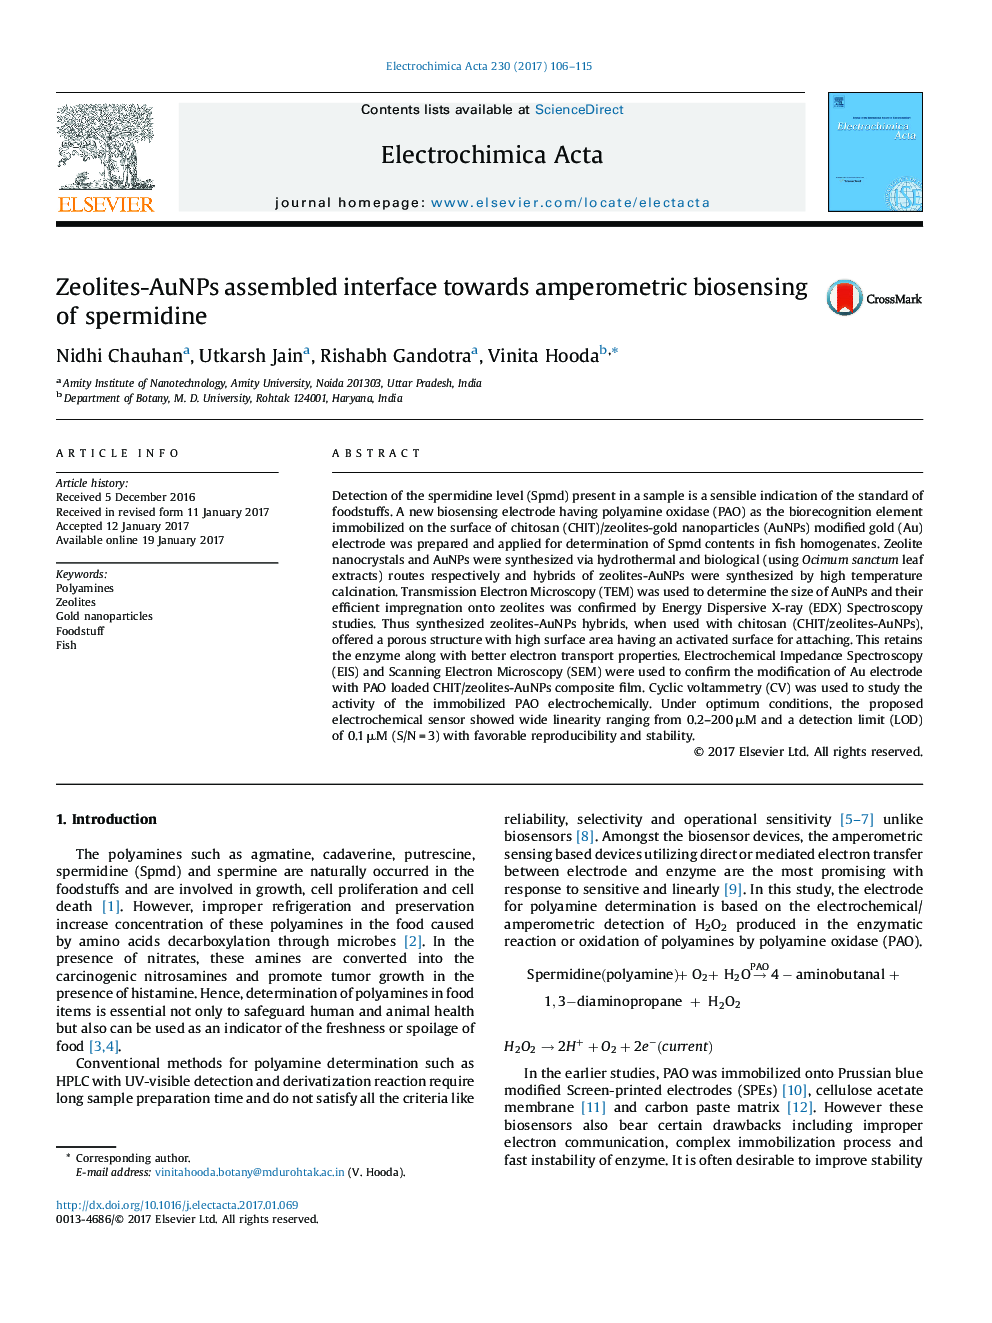 Zeolites-AuNPs assembled interface towards amperometric biosensing of spermidine